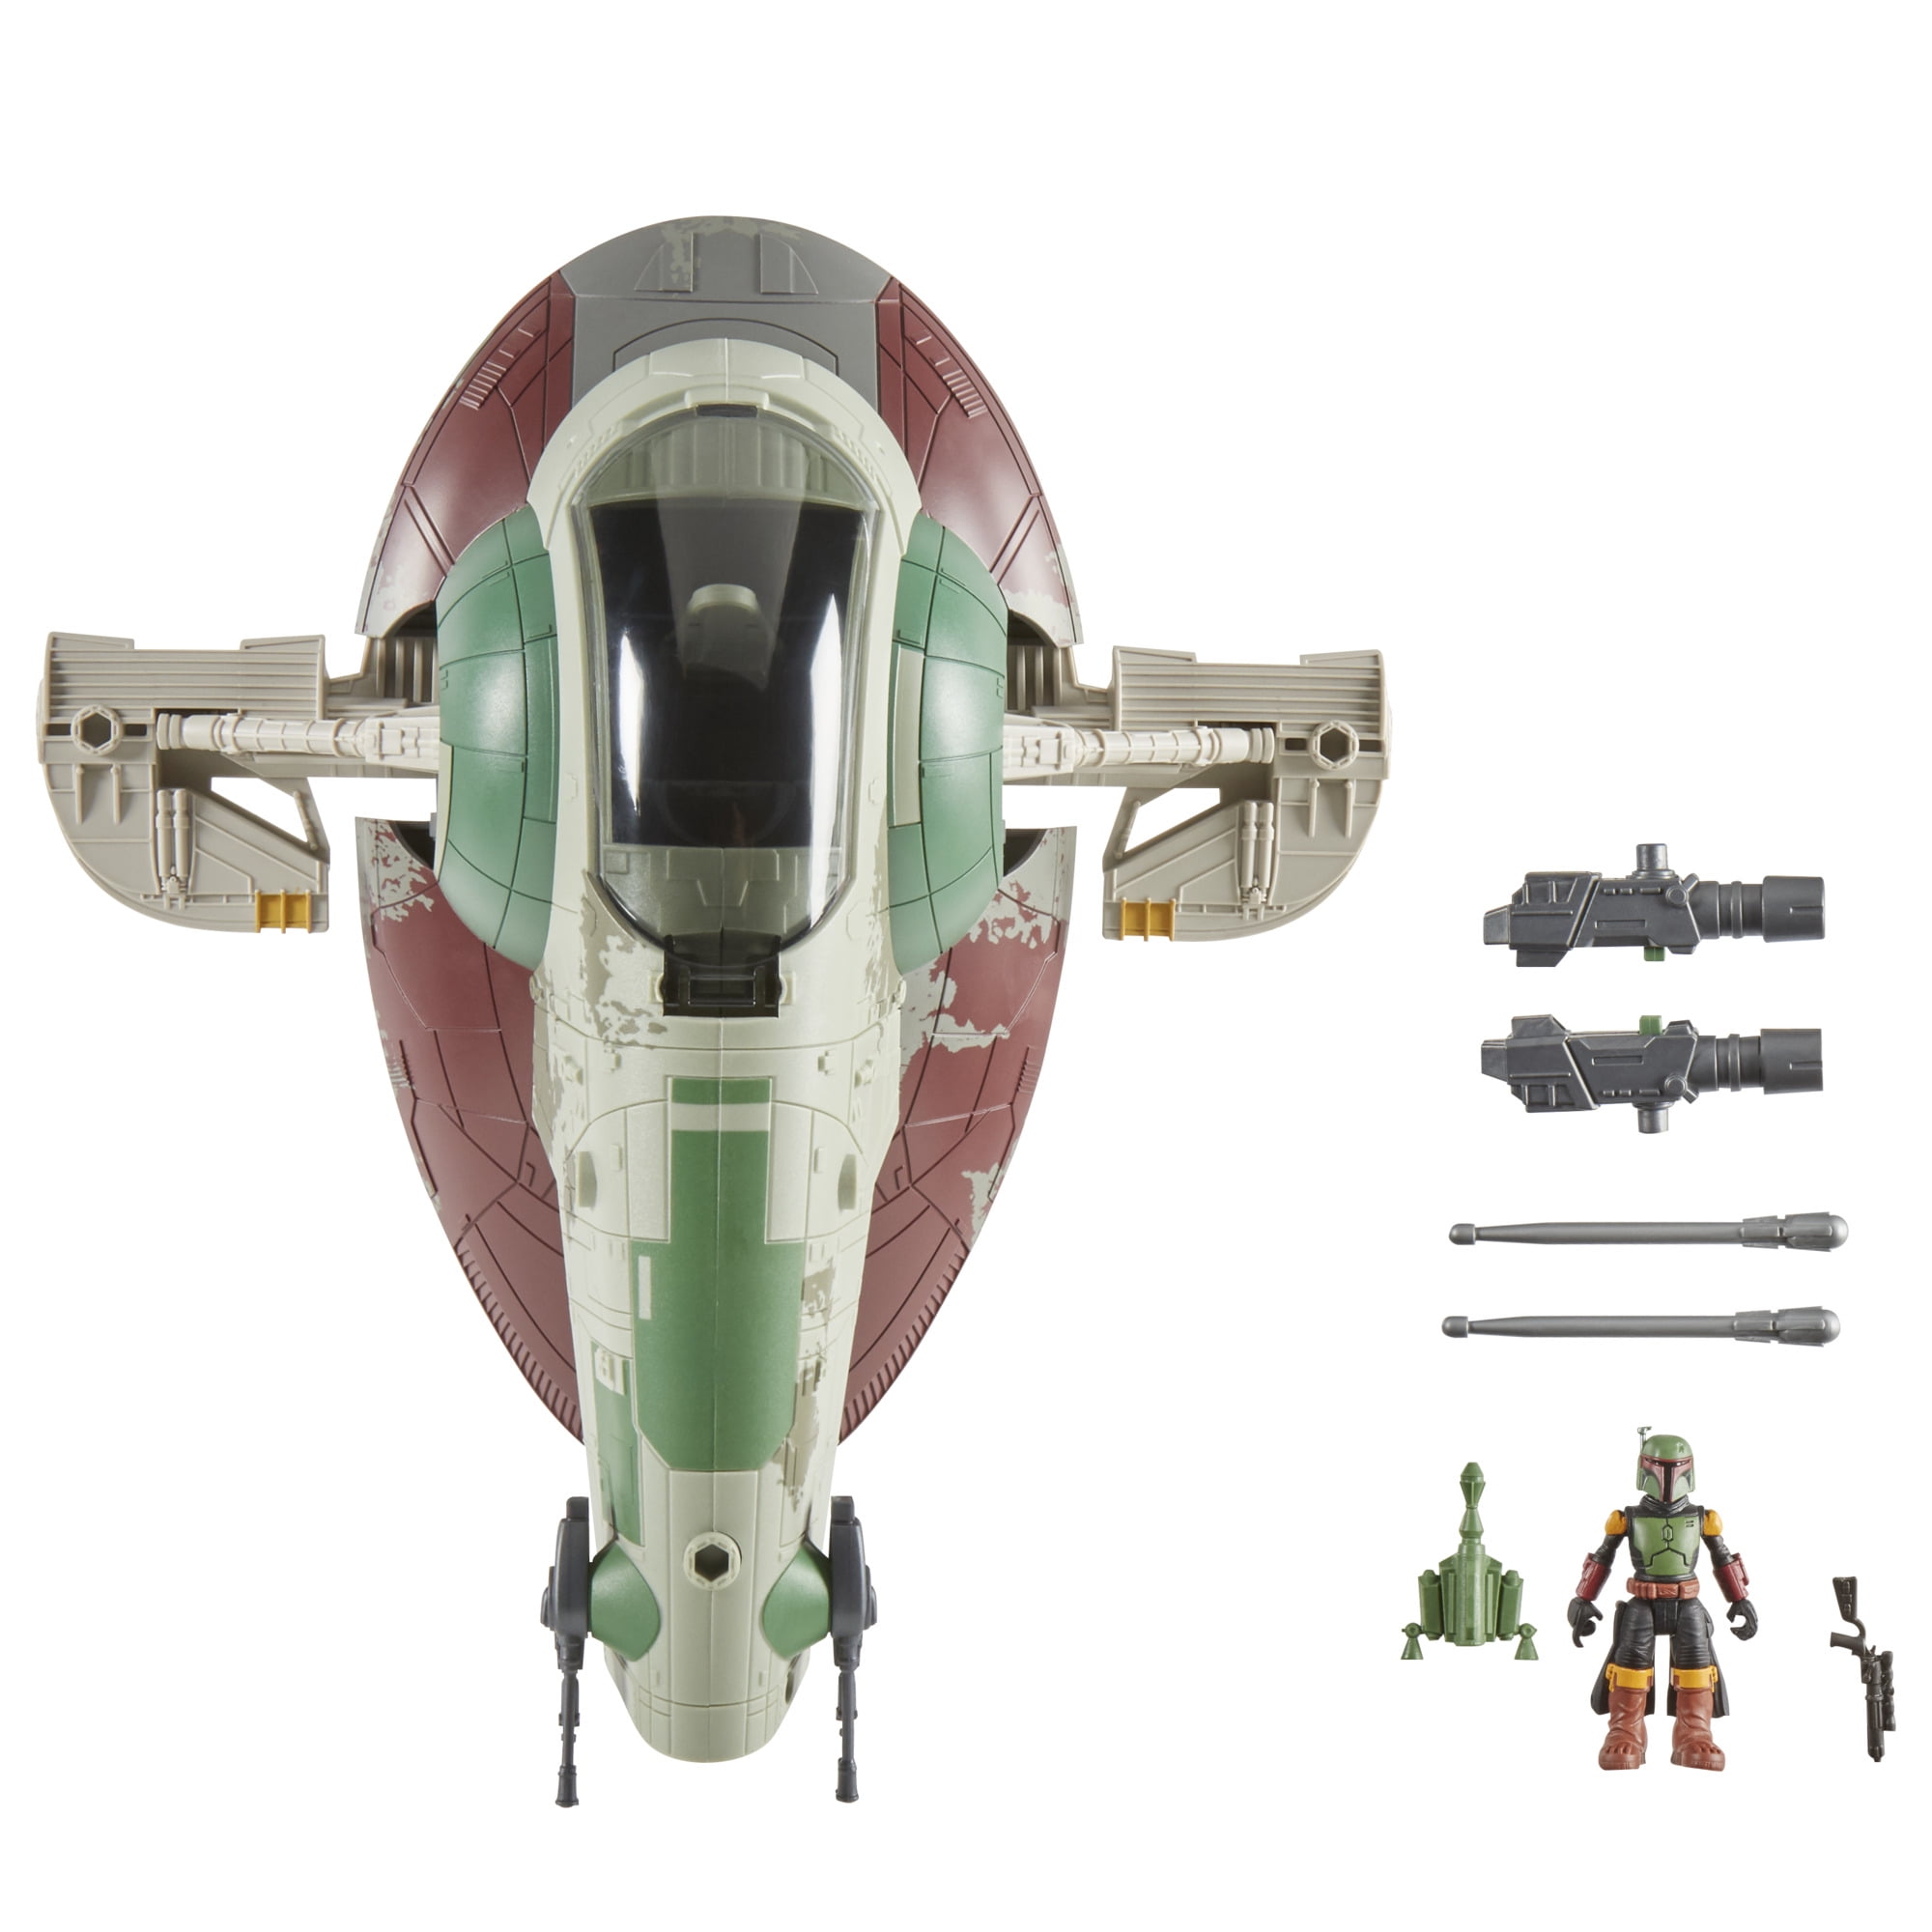 Star Wars Mission Fleet Starship Skirmish, Boba Fett Action Figure and Starship